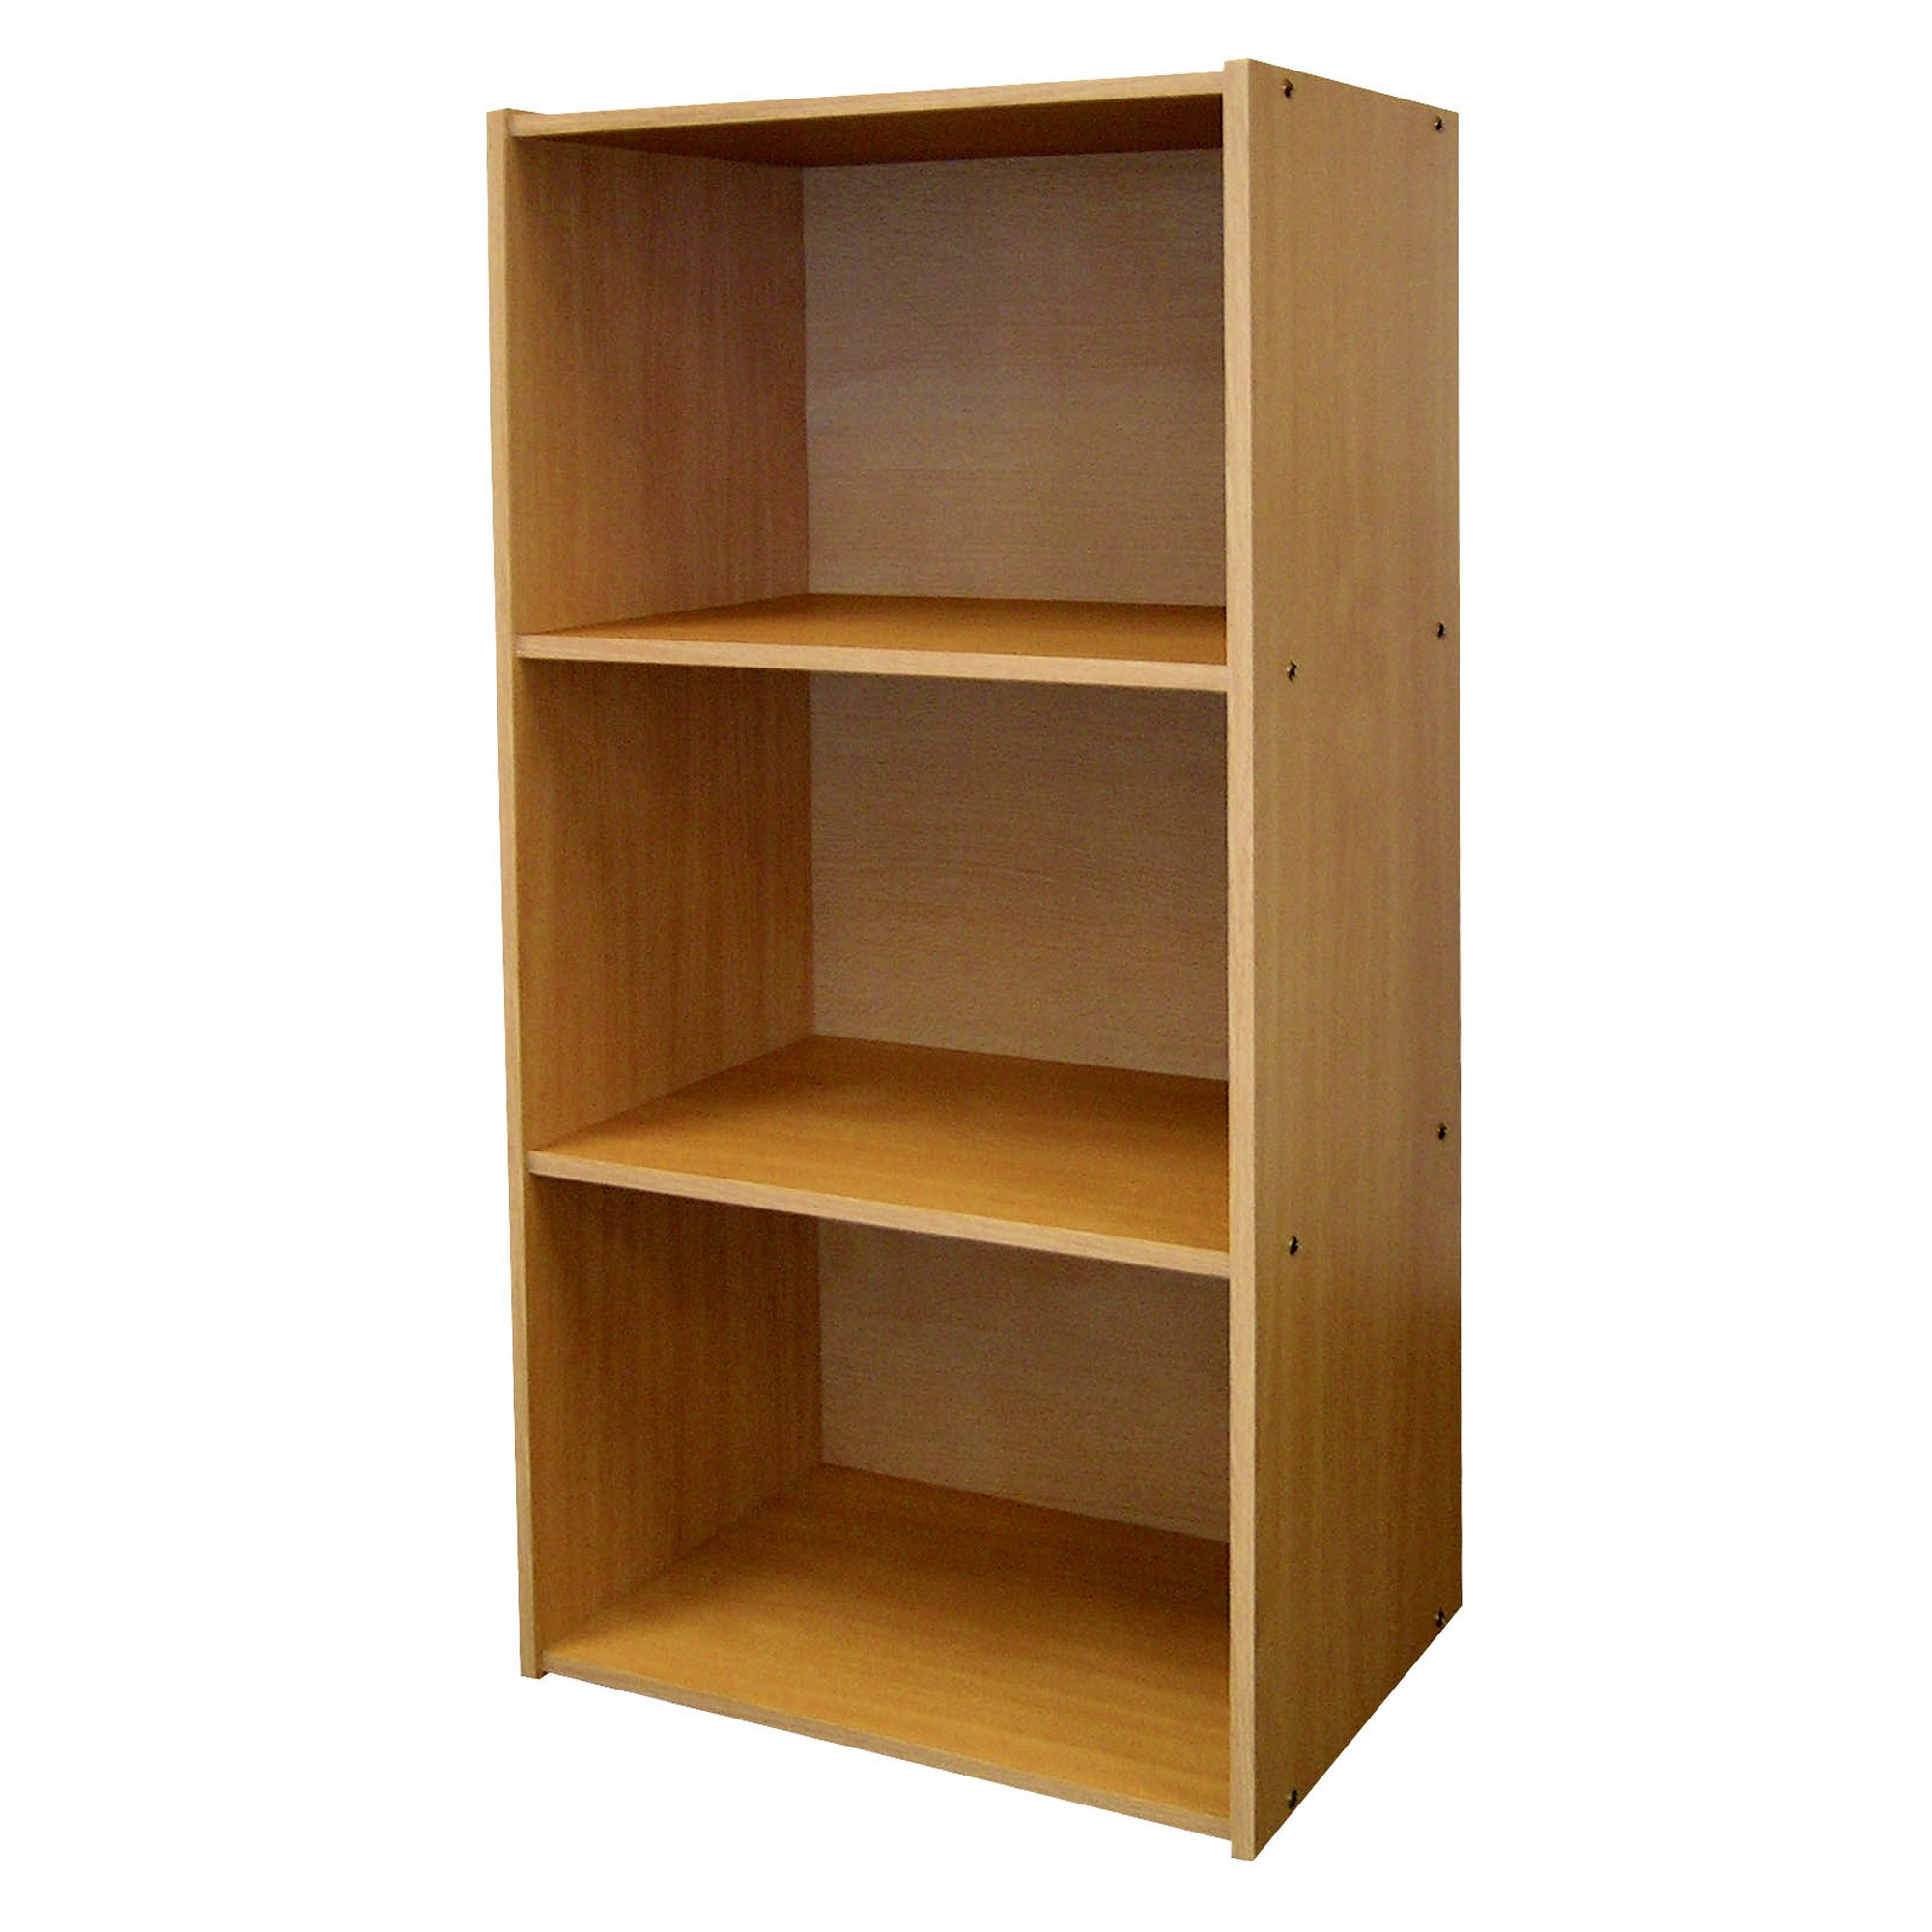 Standard Natural Three Shelf Book Shelf